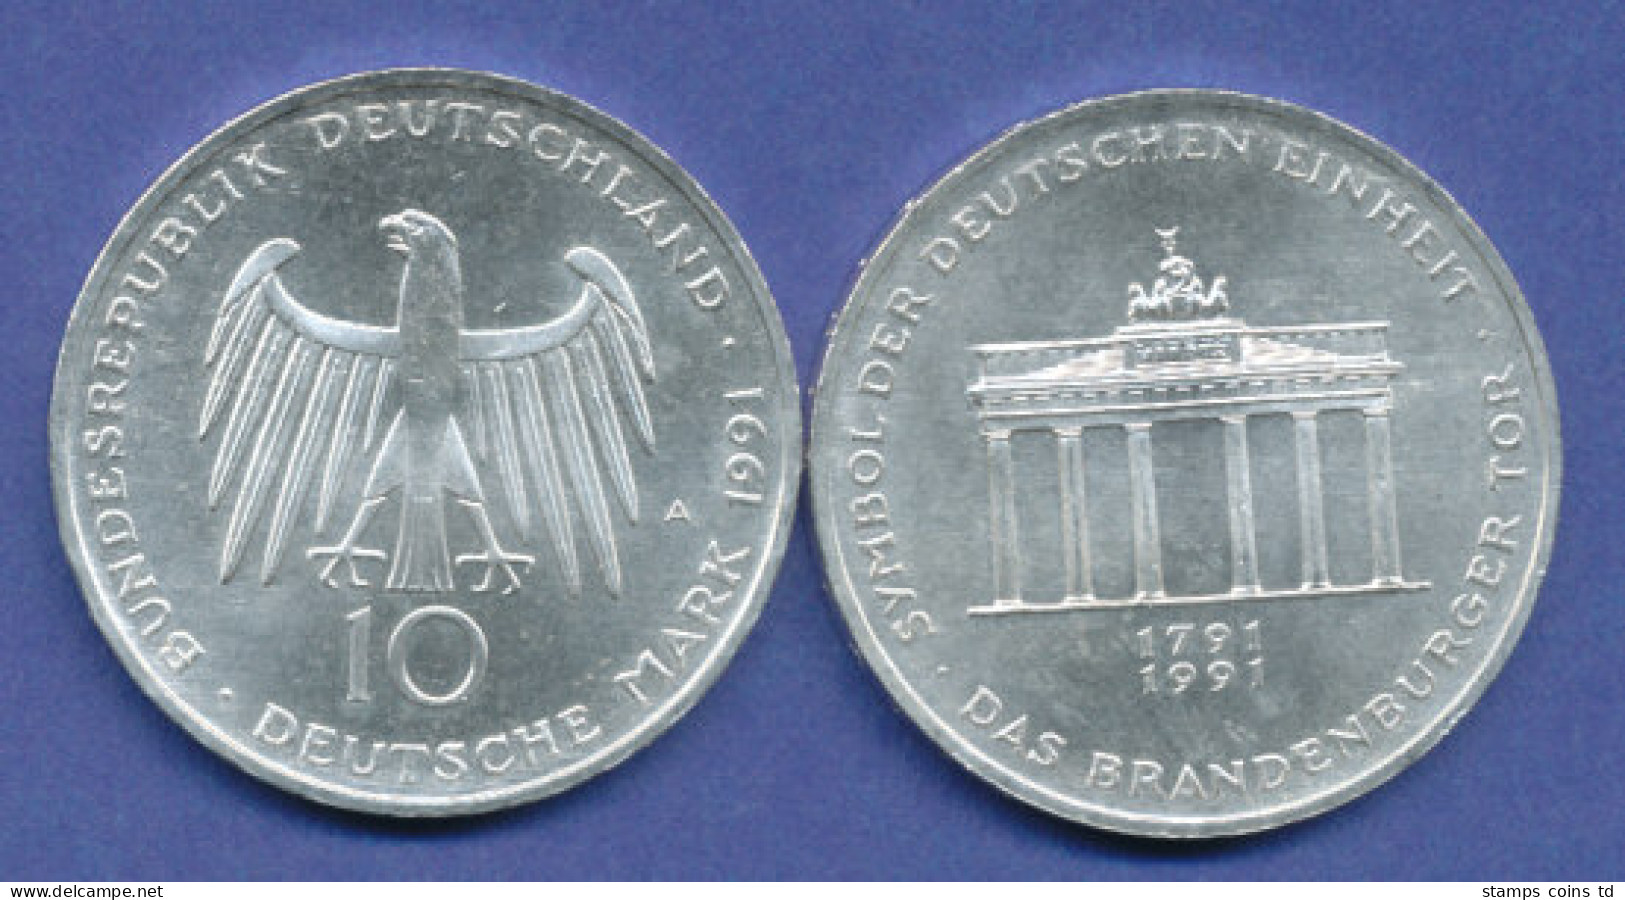 Bundesrepublik 10DM Silber-Gedenkmünze 1991, 200 Jahre Brandenburger Tor - 10 Mark